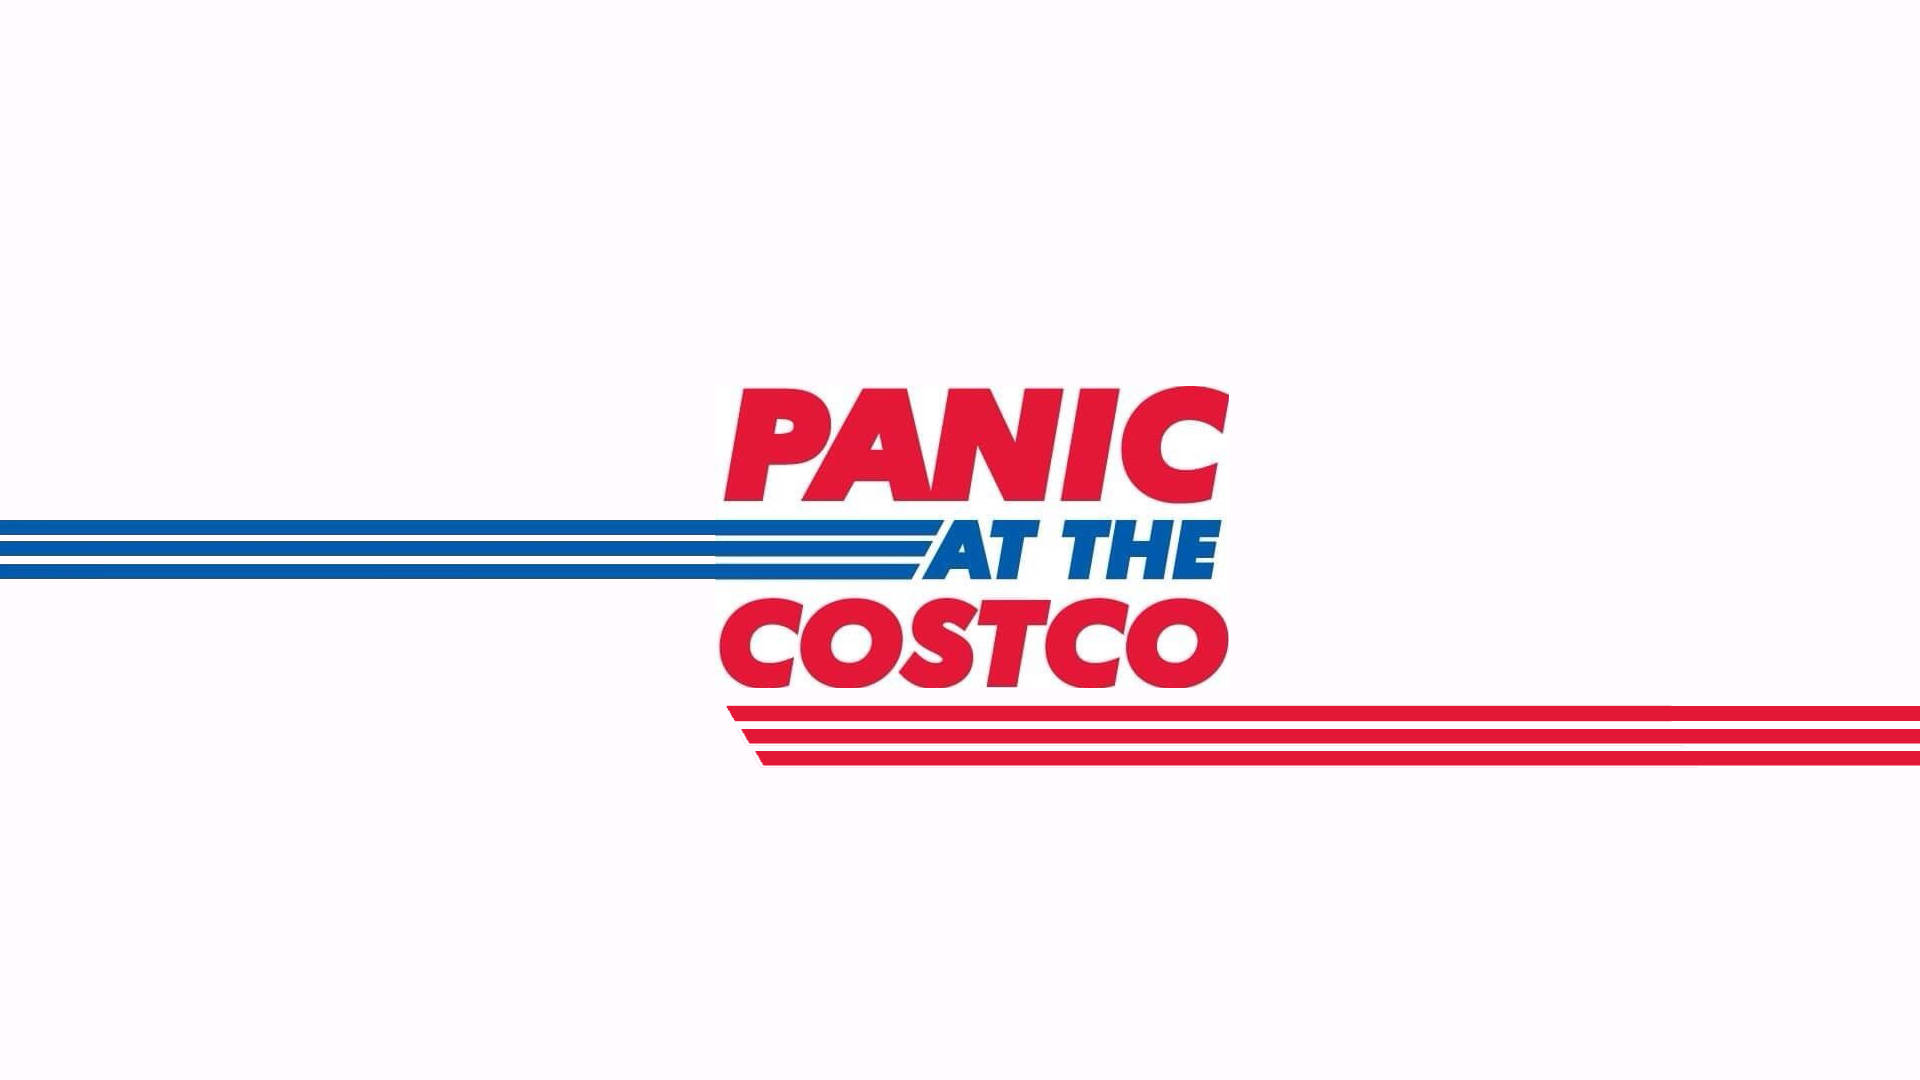 Panicat The Costco Wallpaper